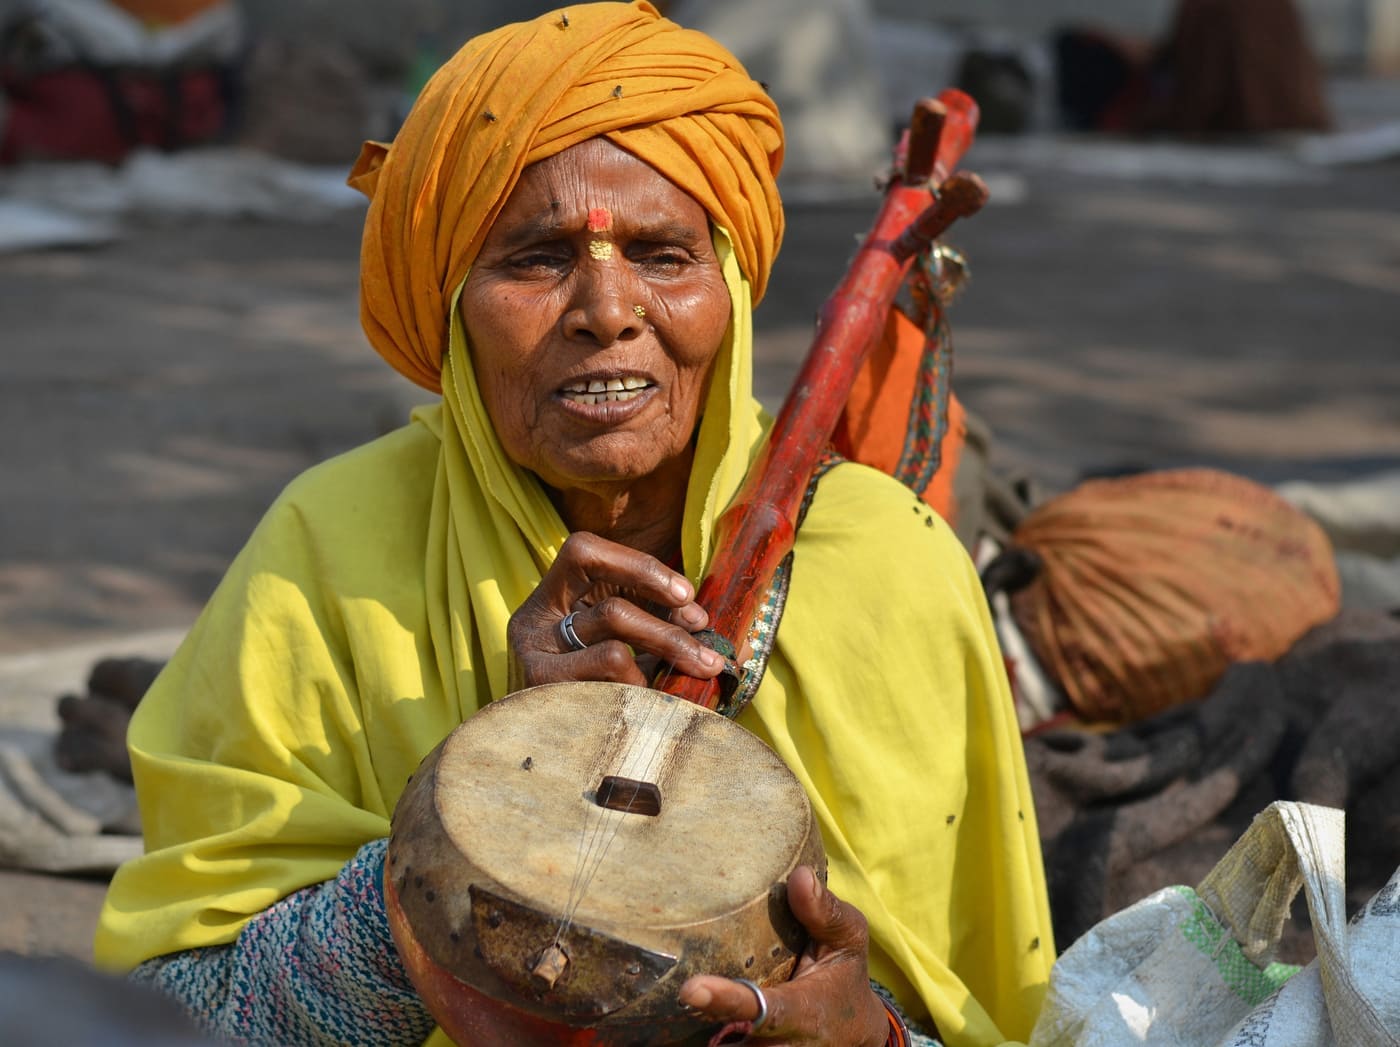 Old Indian temple musicians playing the rectangular Indian tambourine (jheeka) and singing at Ram Raja Mandir, Orchha 